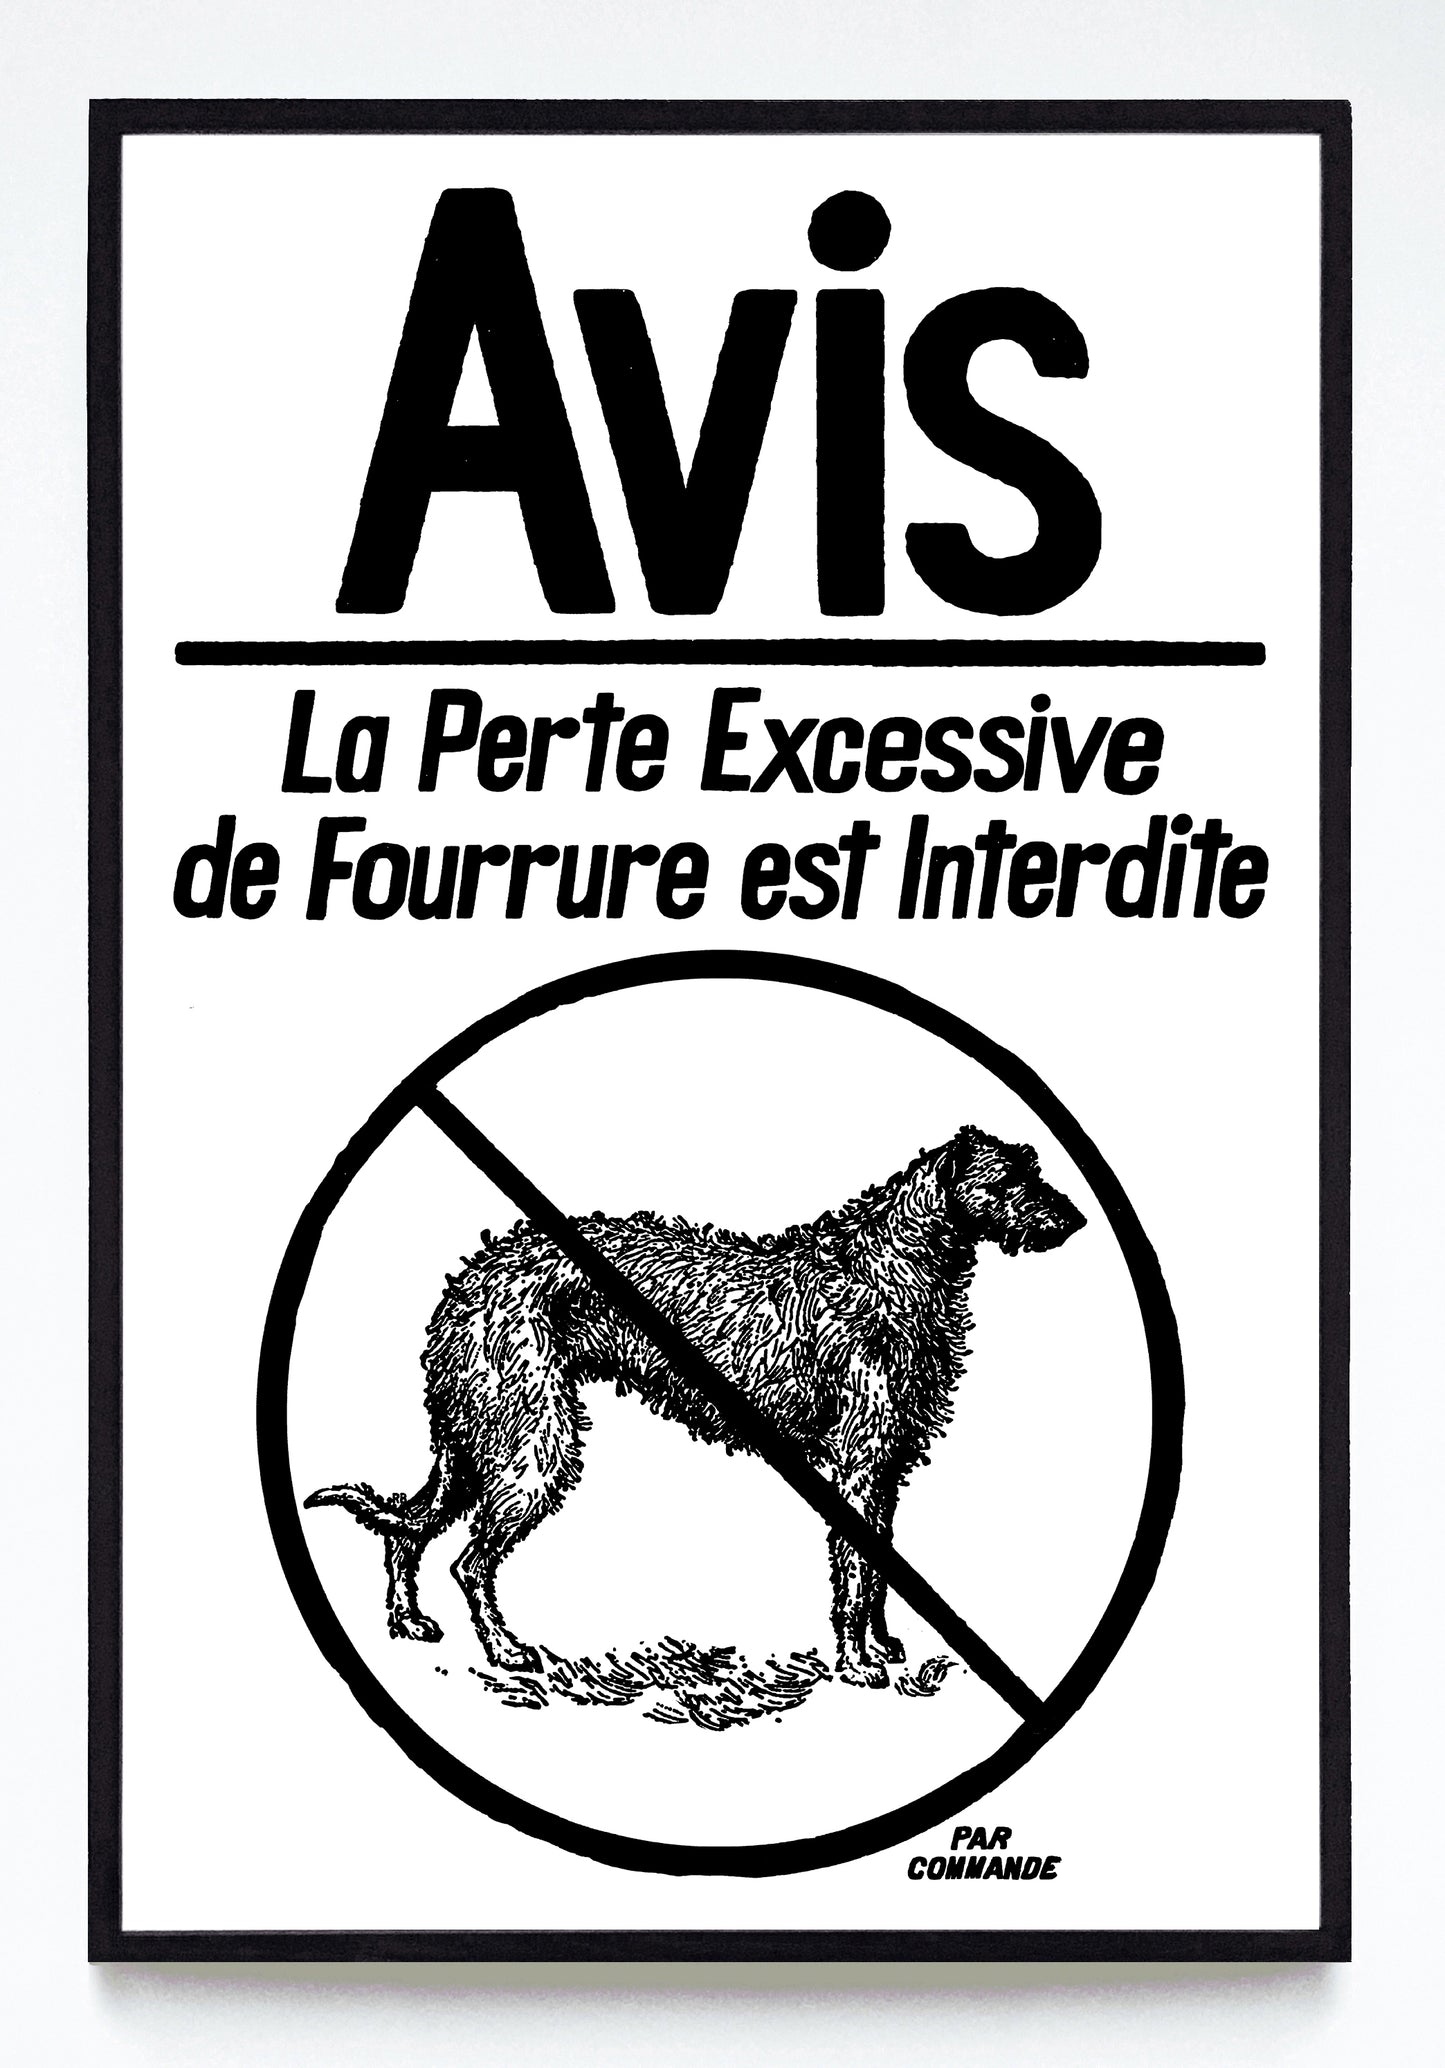 Animal Control print series